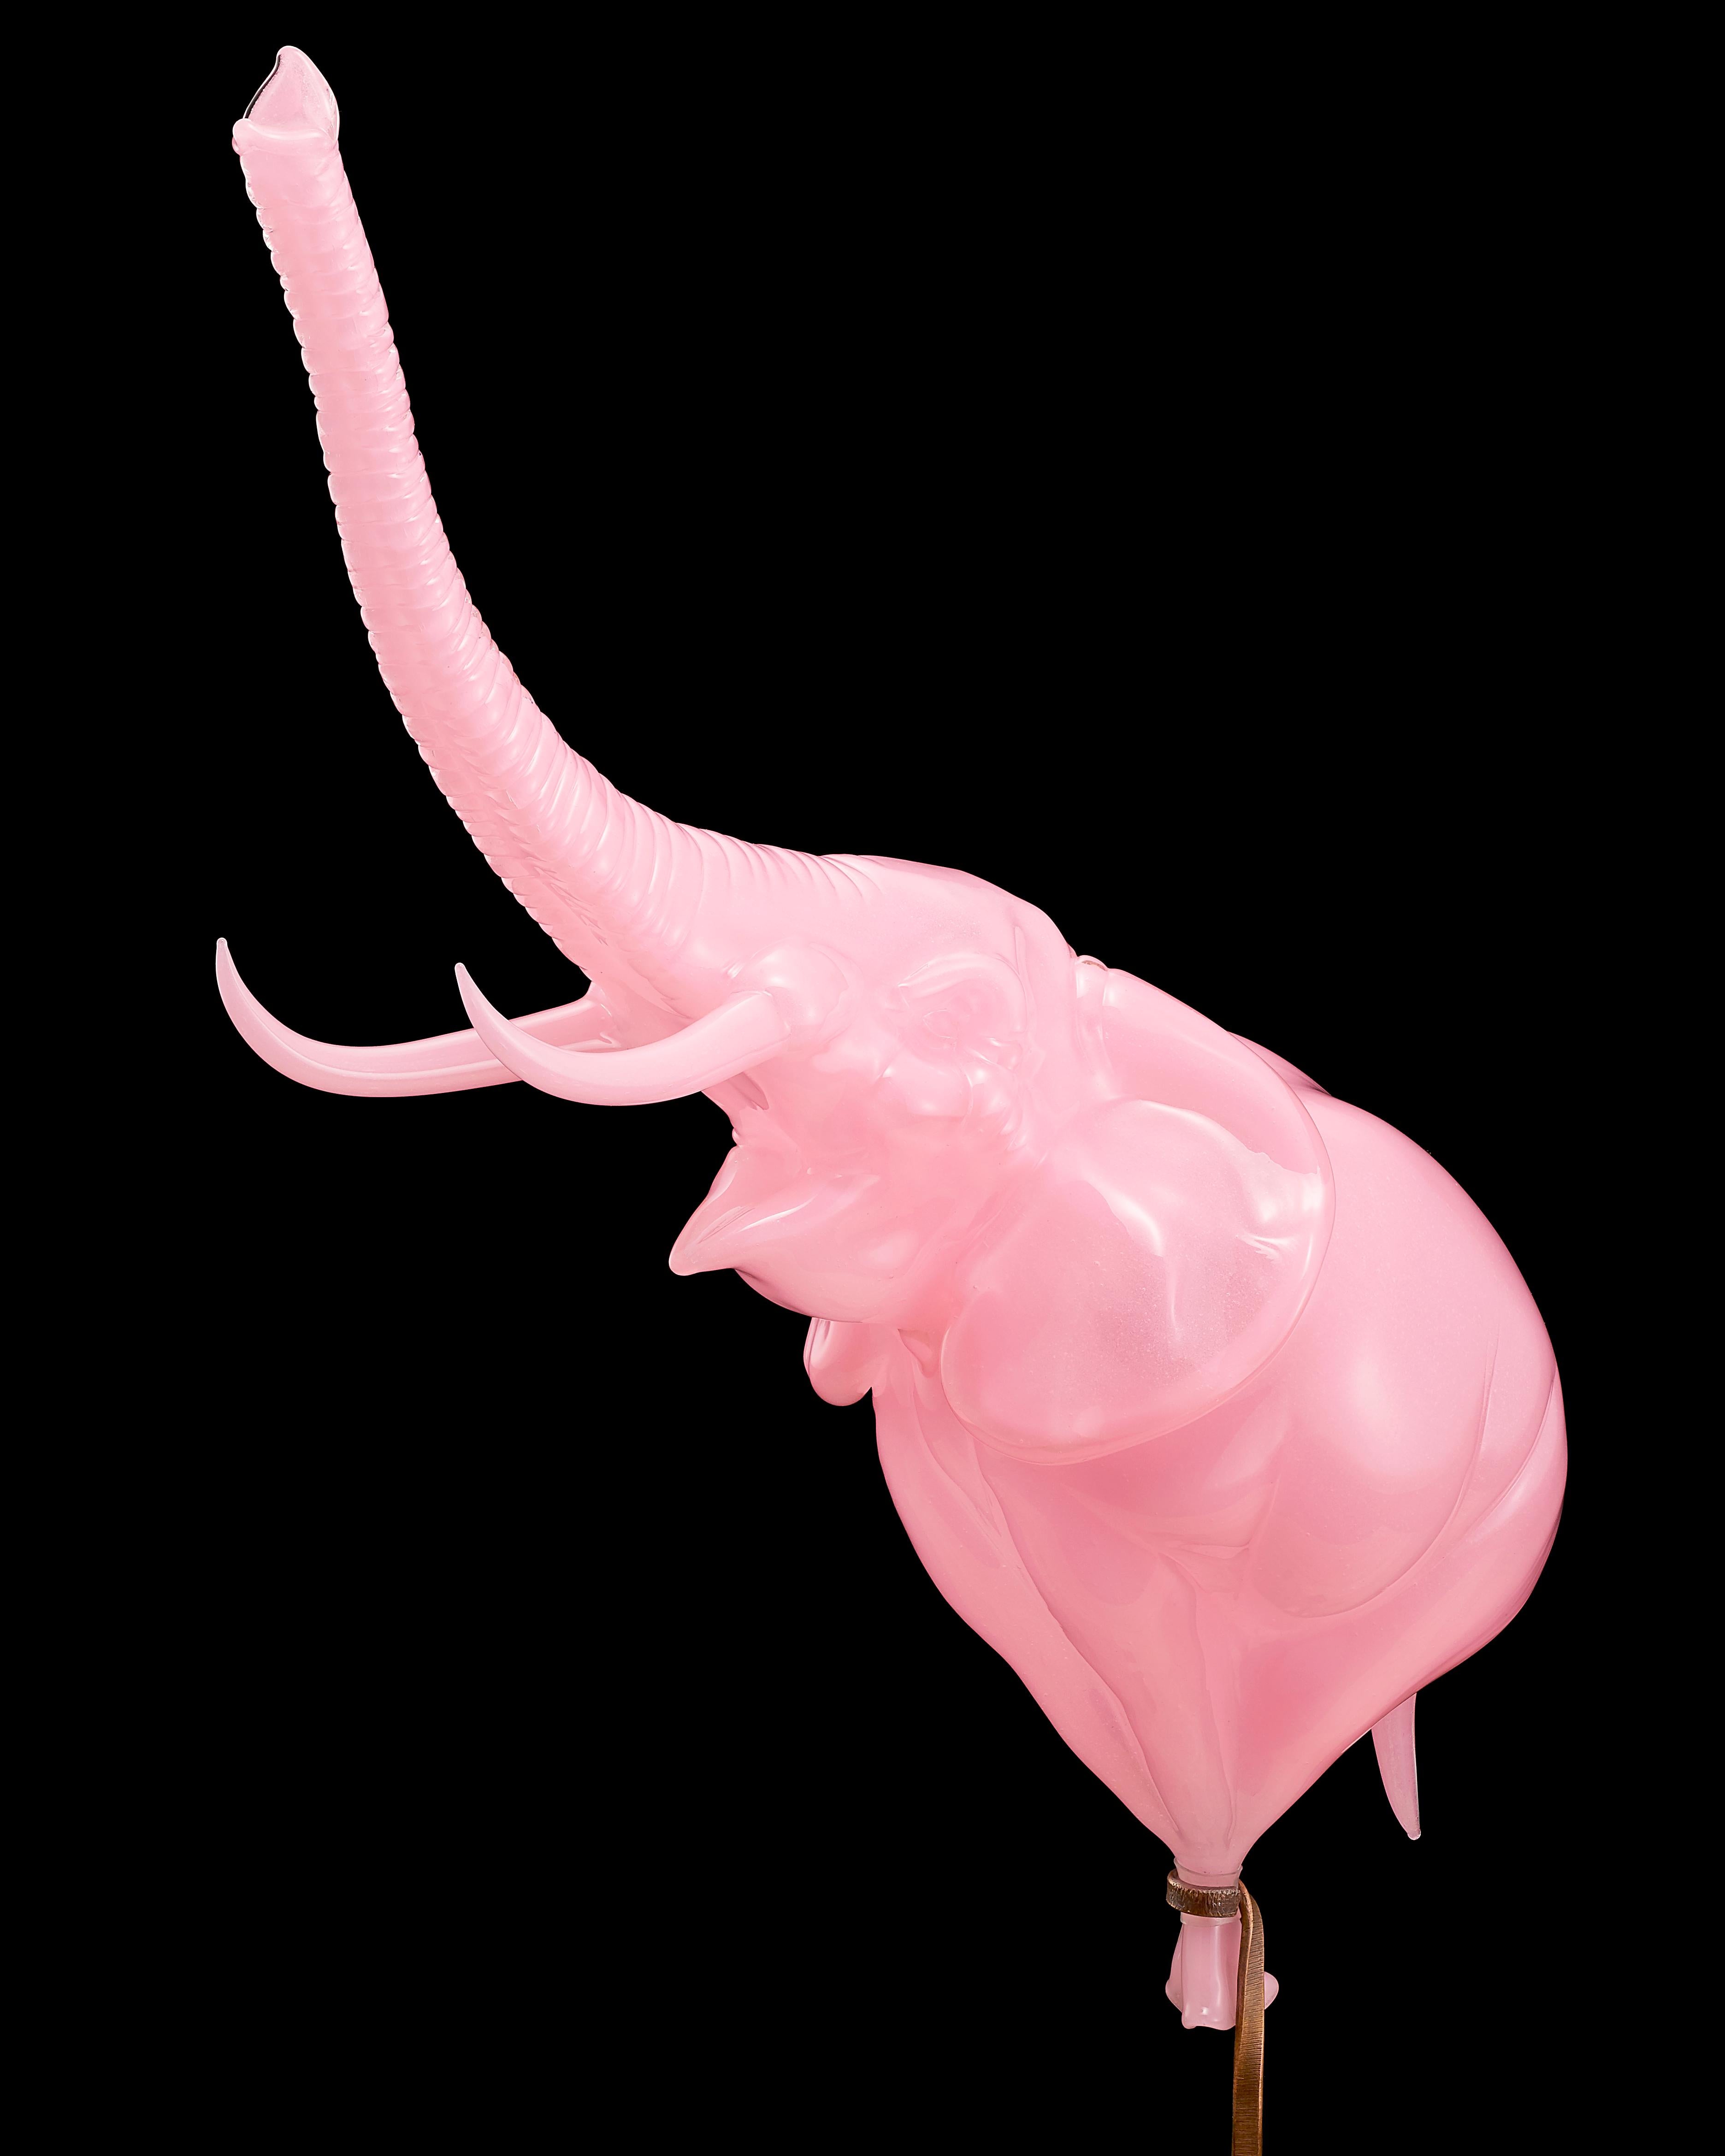 Pink Elephant Balloon - Sculpture by Chris Ahalt